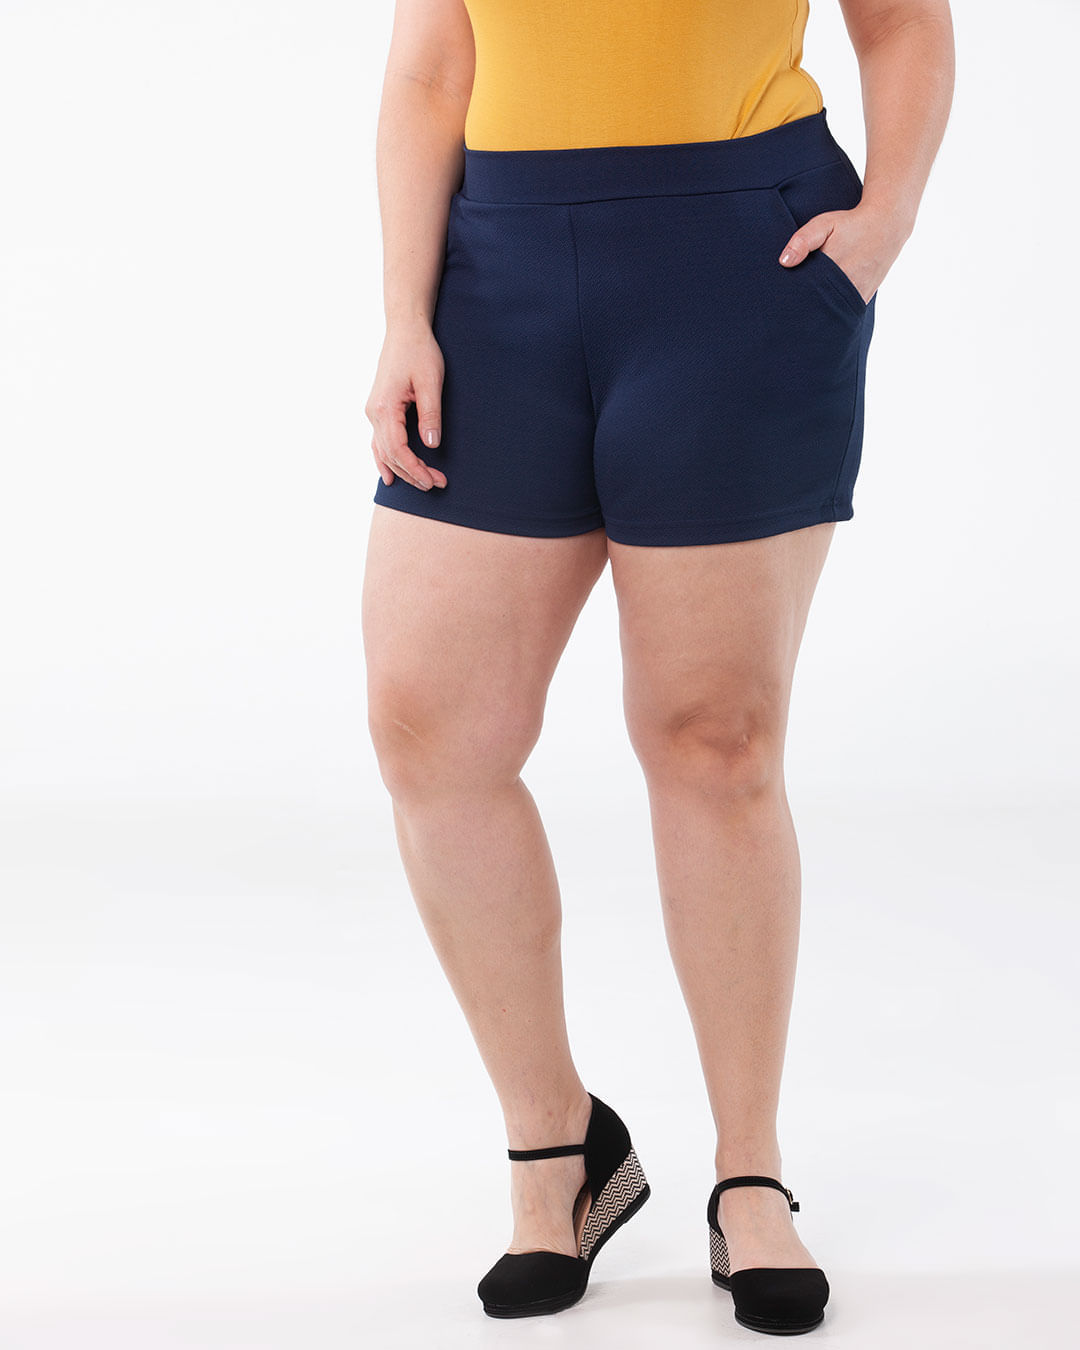 Shorts-Crepe-Feminino-Plus-Size-Basico-Cintura-Media-Azul-Marinho